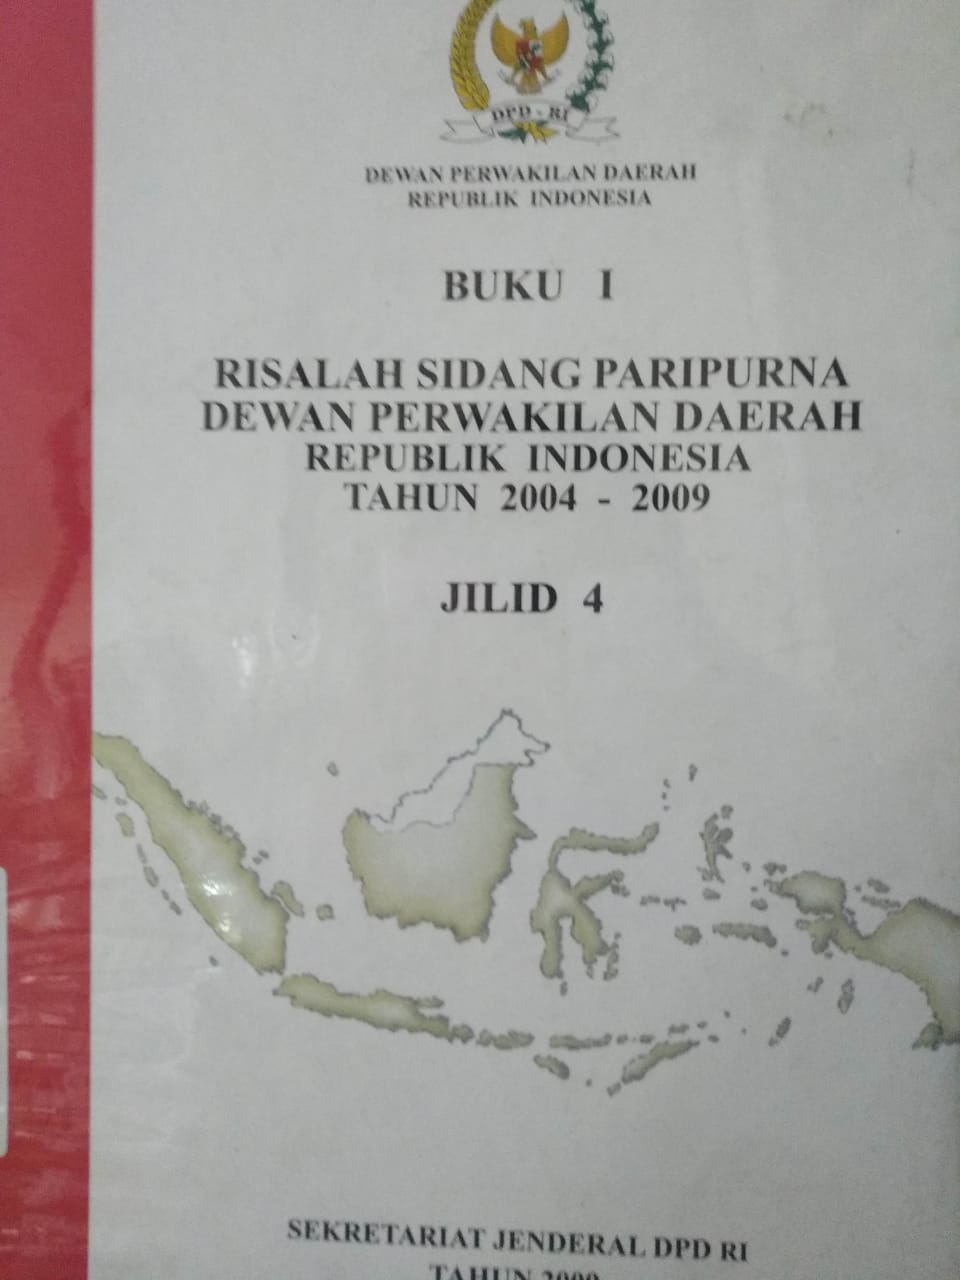 Buku I. Risalah Sidang Paripurna Dewan Perwakilan Daerah Republik Indonesia Jilid 4